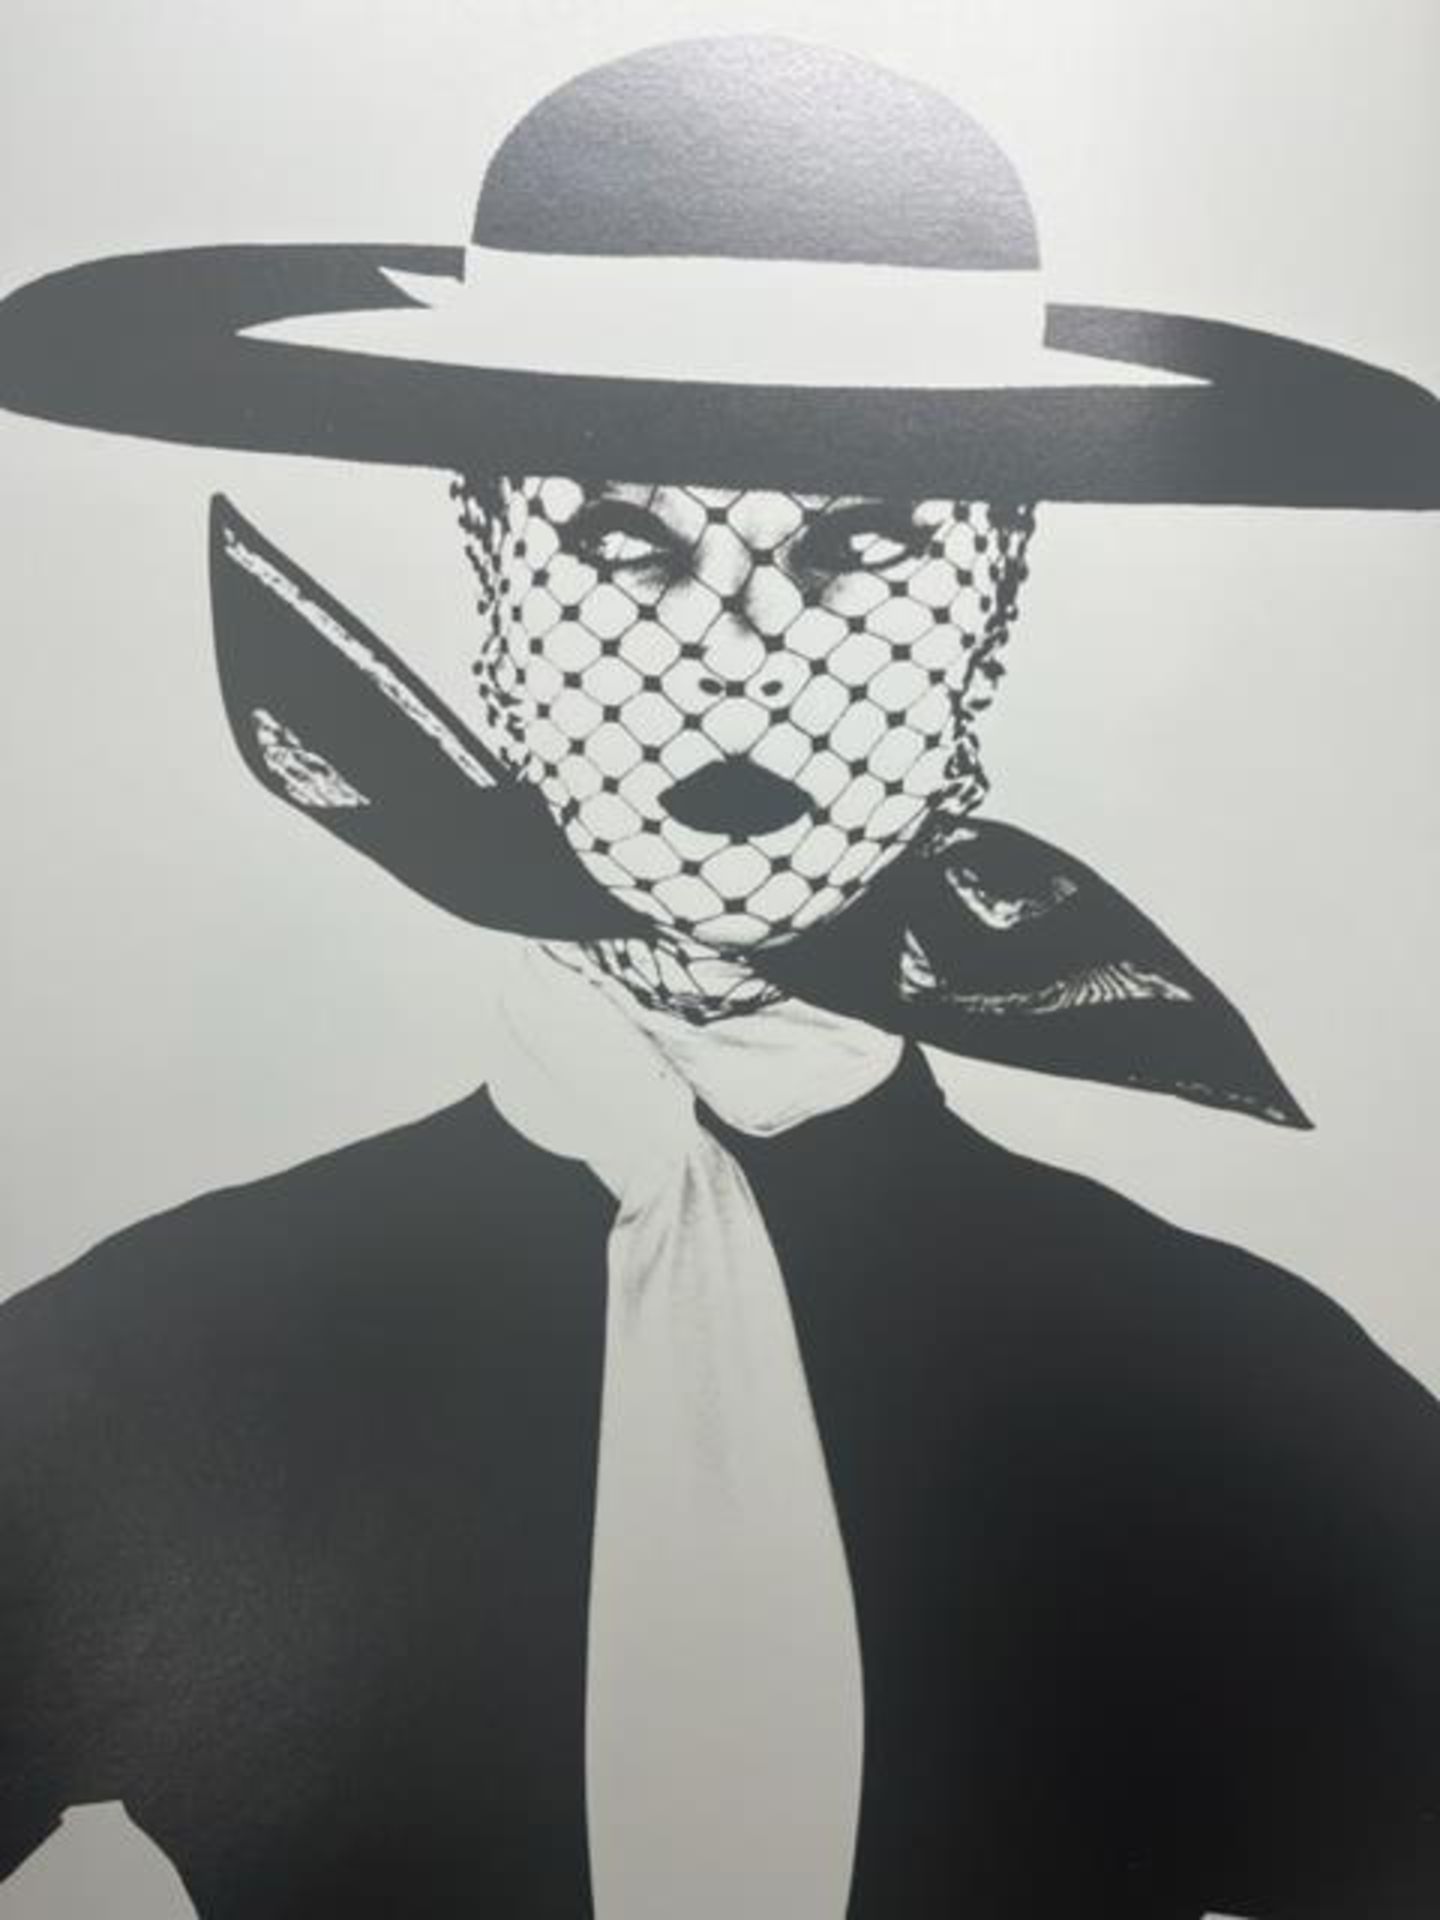 Irving Penn "Black and White Vogue" Print.